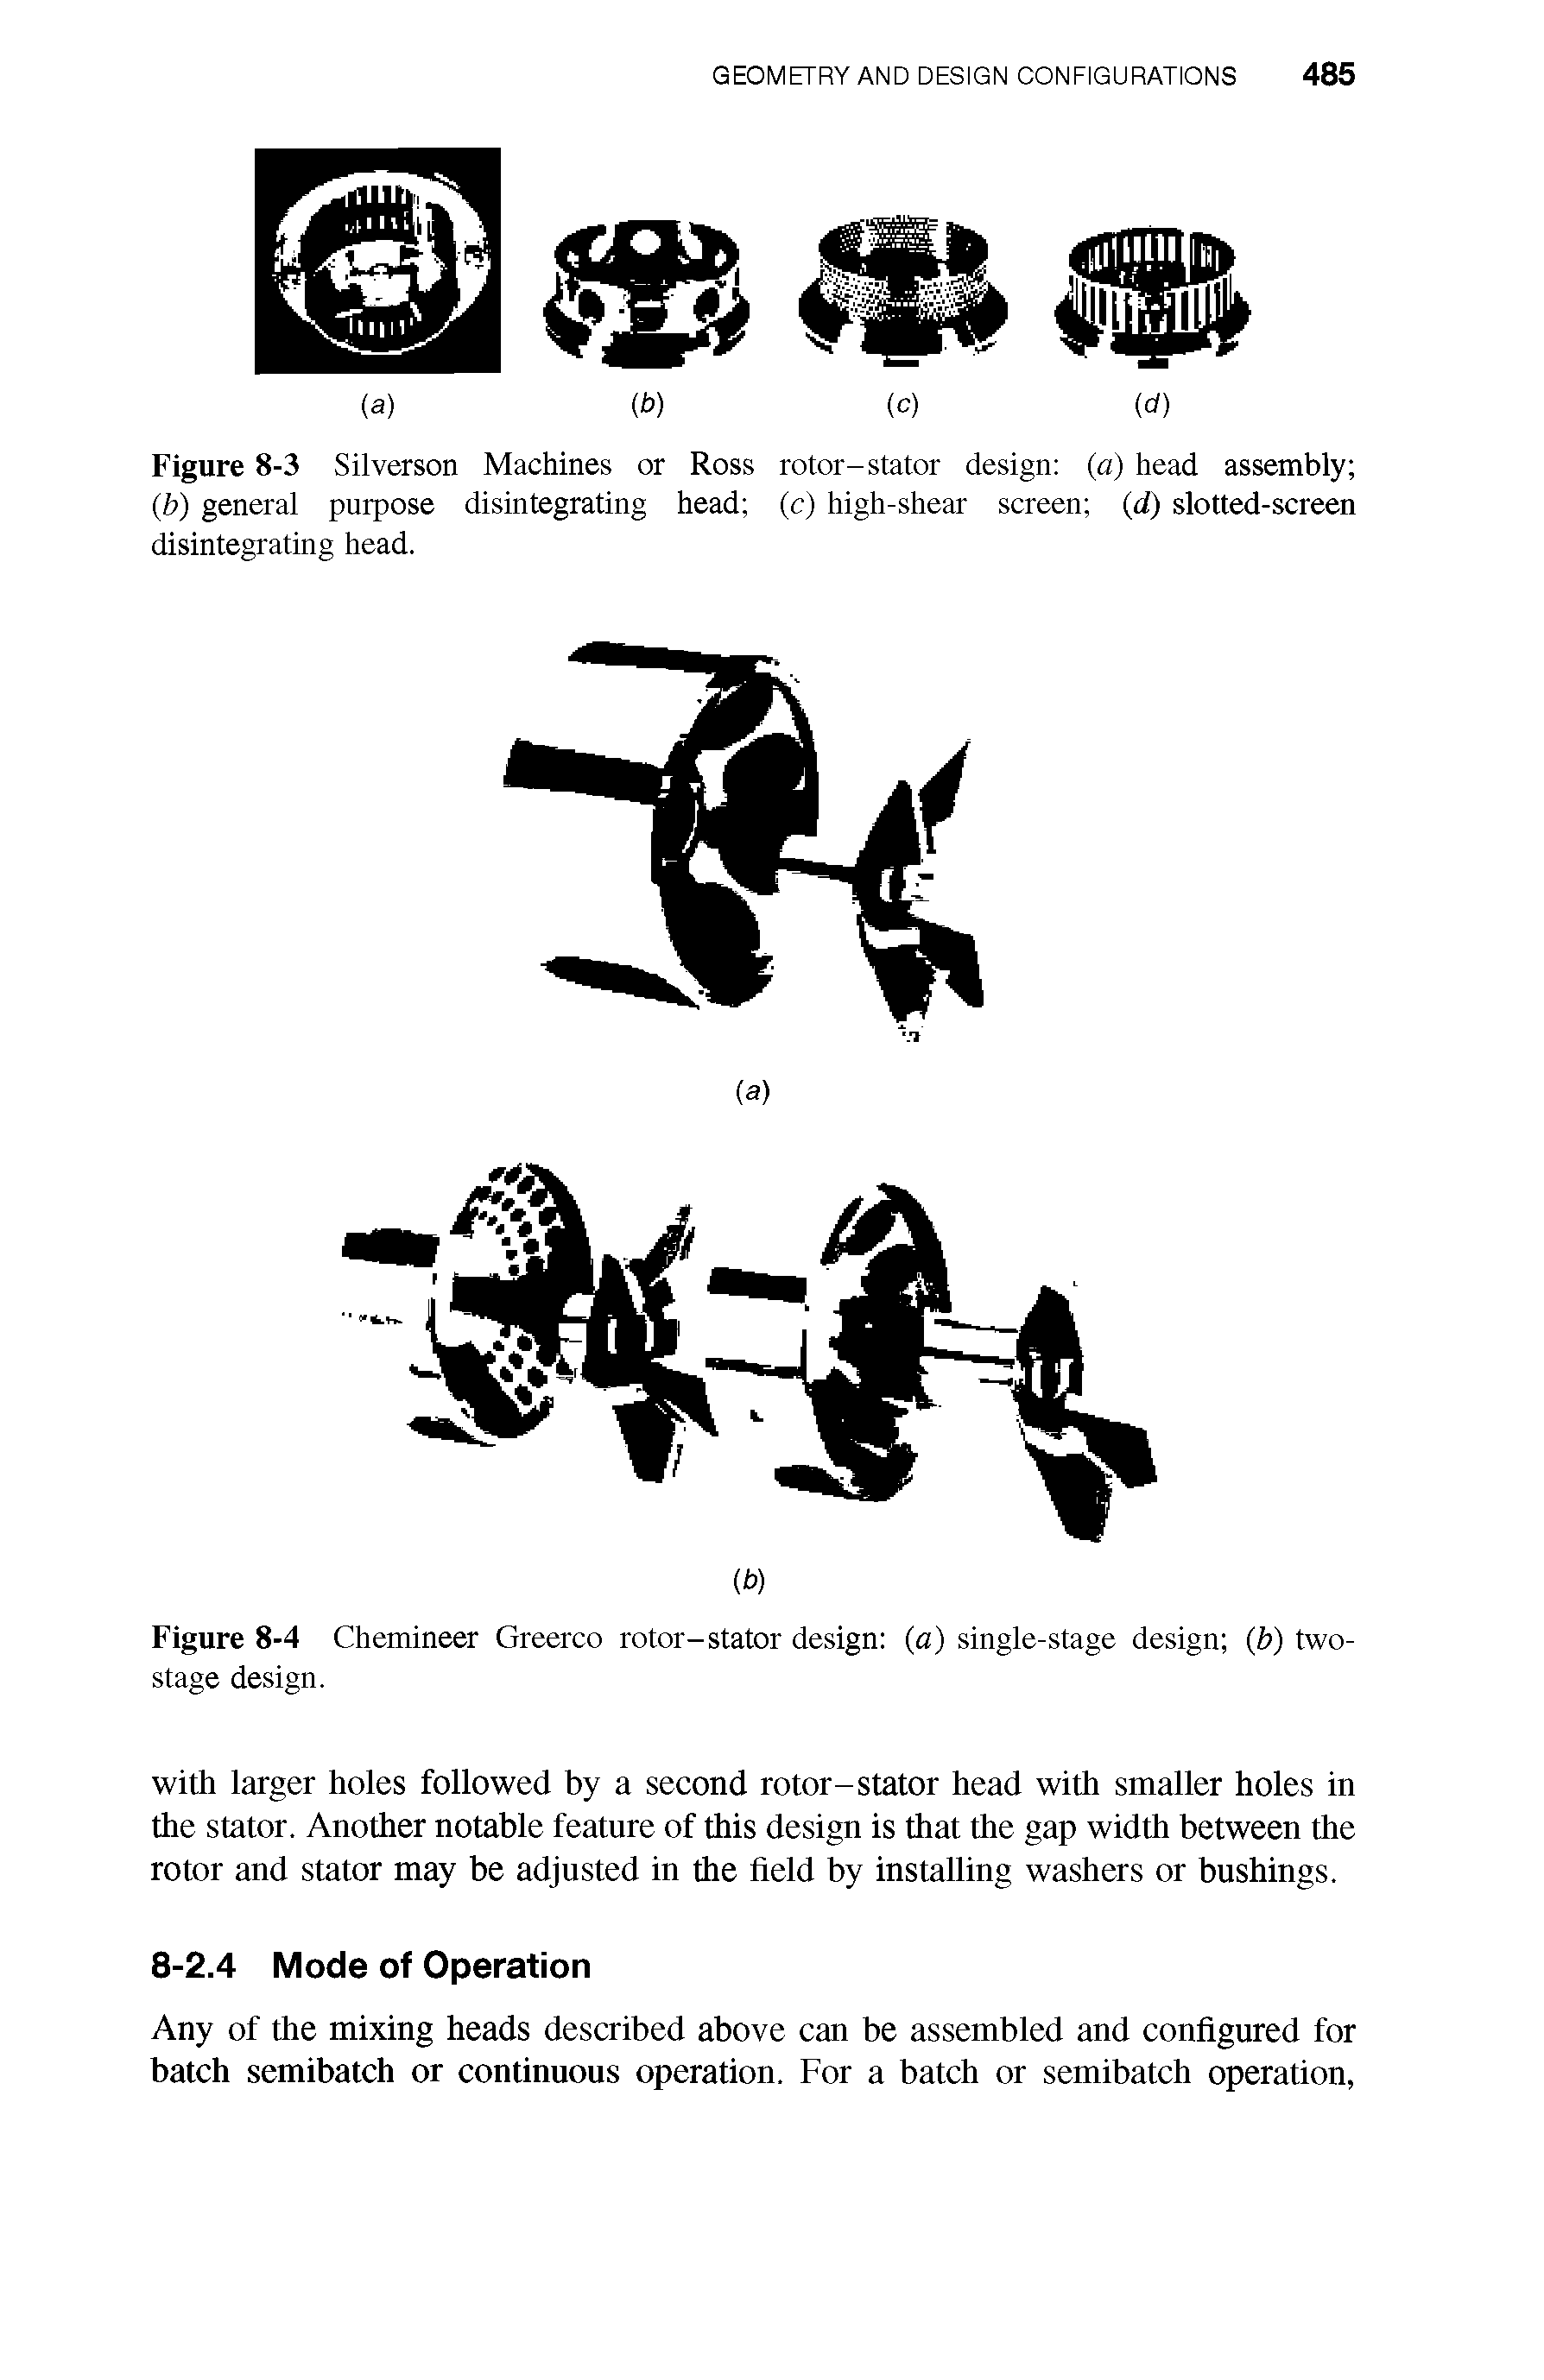 Figure 8-3 Silverson Machines or Ross rotor-stator design (a) head assembly (b) general purpose disintegrating head (c) high-shear screen (d) slotted-screen disintegrating head.